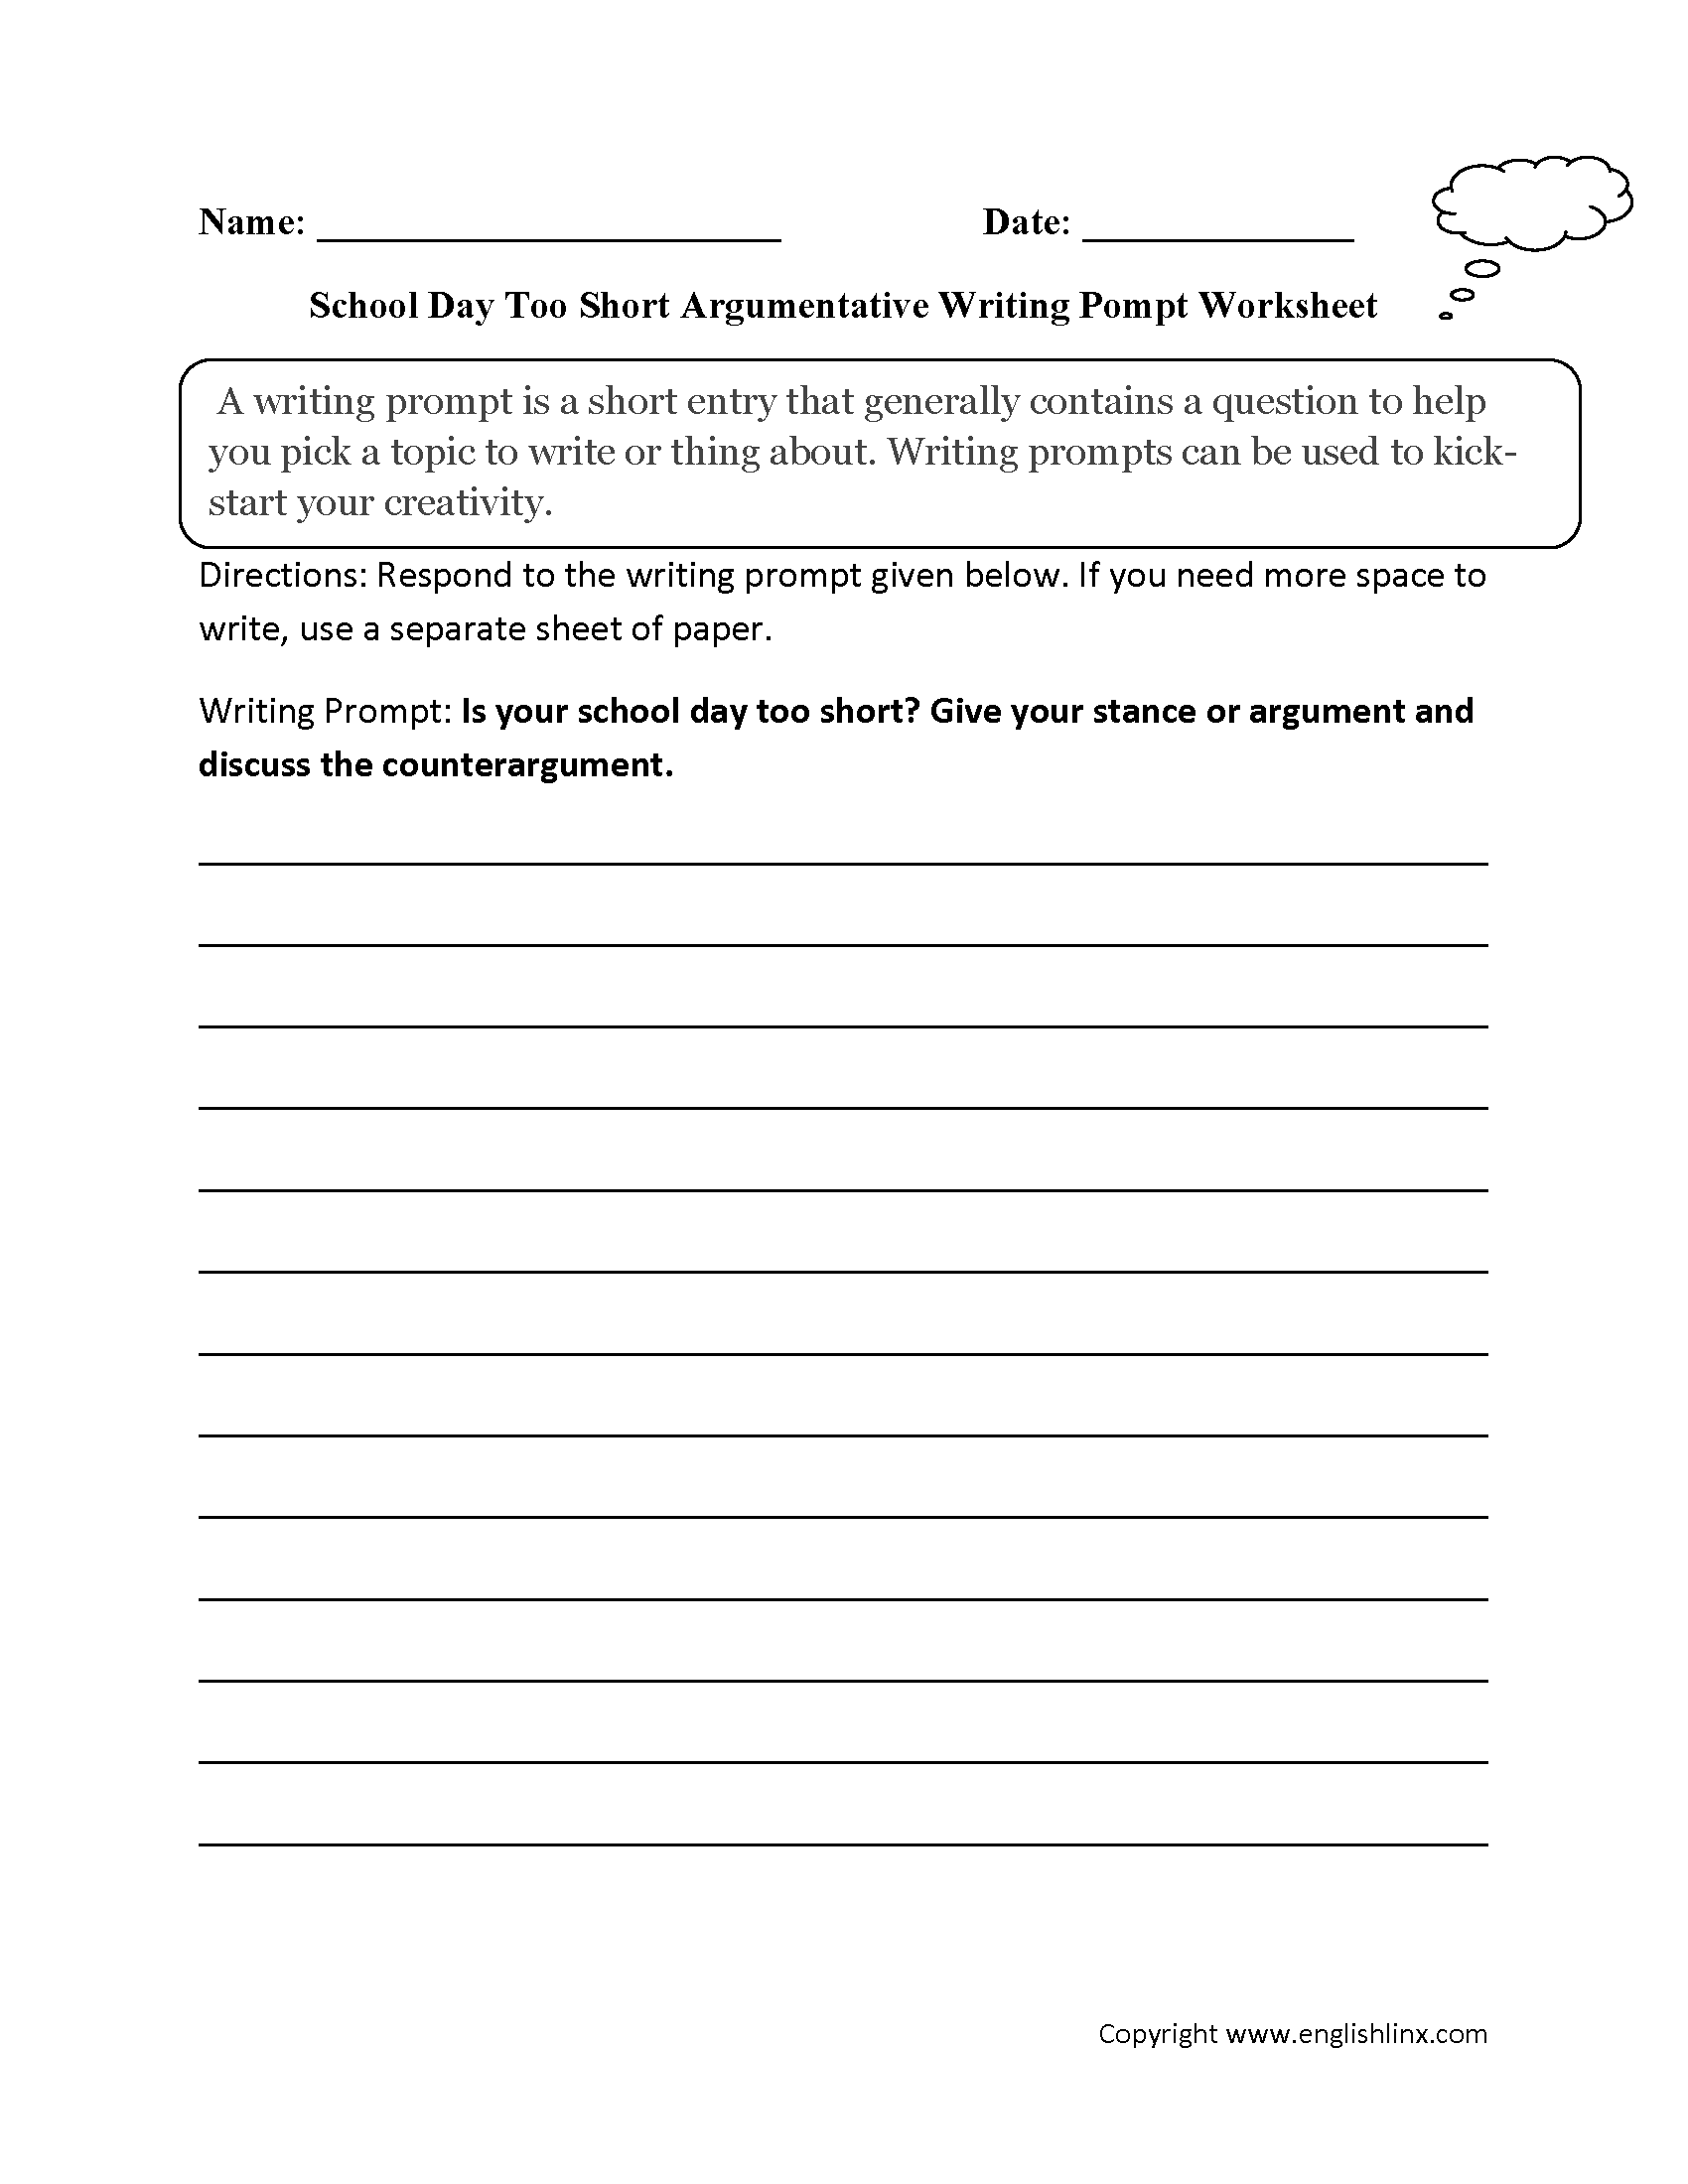 Length of School Argumentative Writing Prompt Worksheet